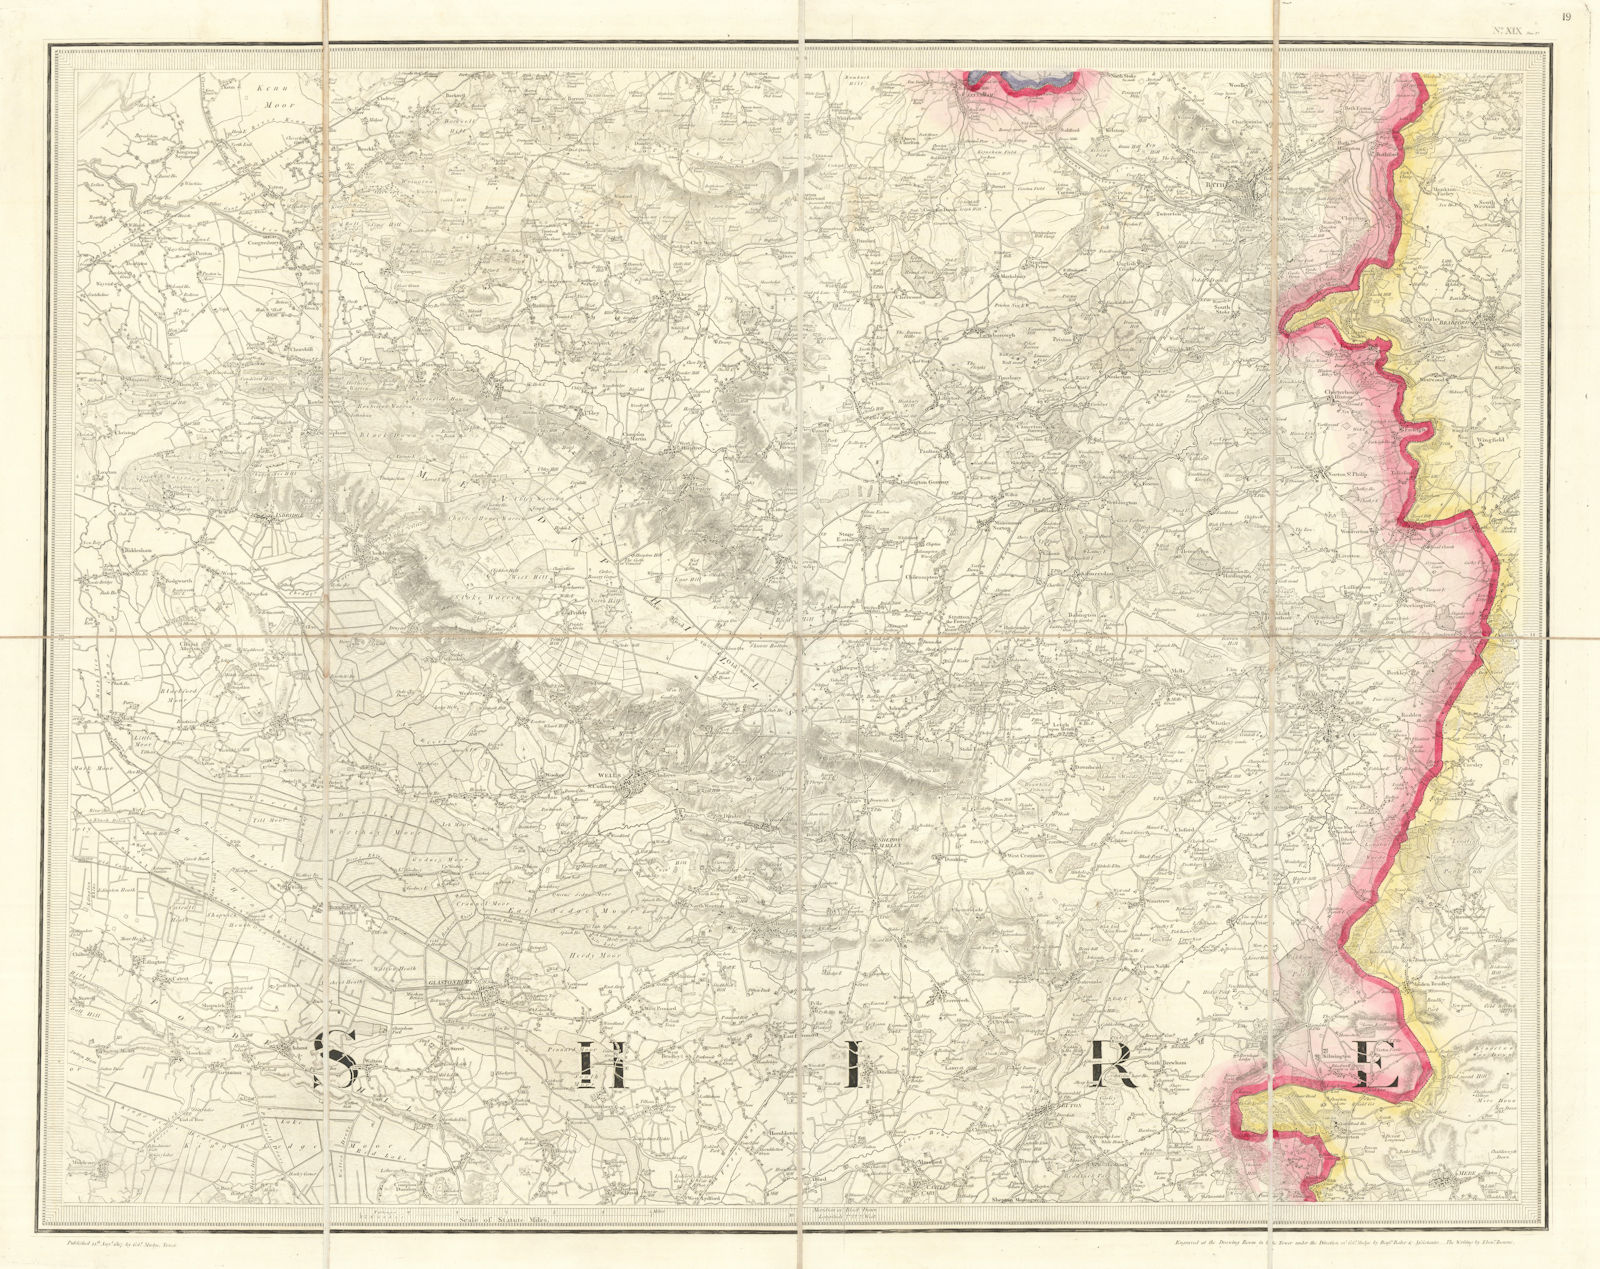 OS #19 Mendip Hills & South Cotswolds. Bath Wells Glastonbury Somerset 1817 map